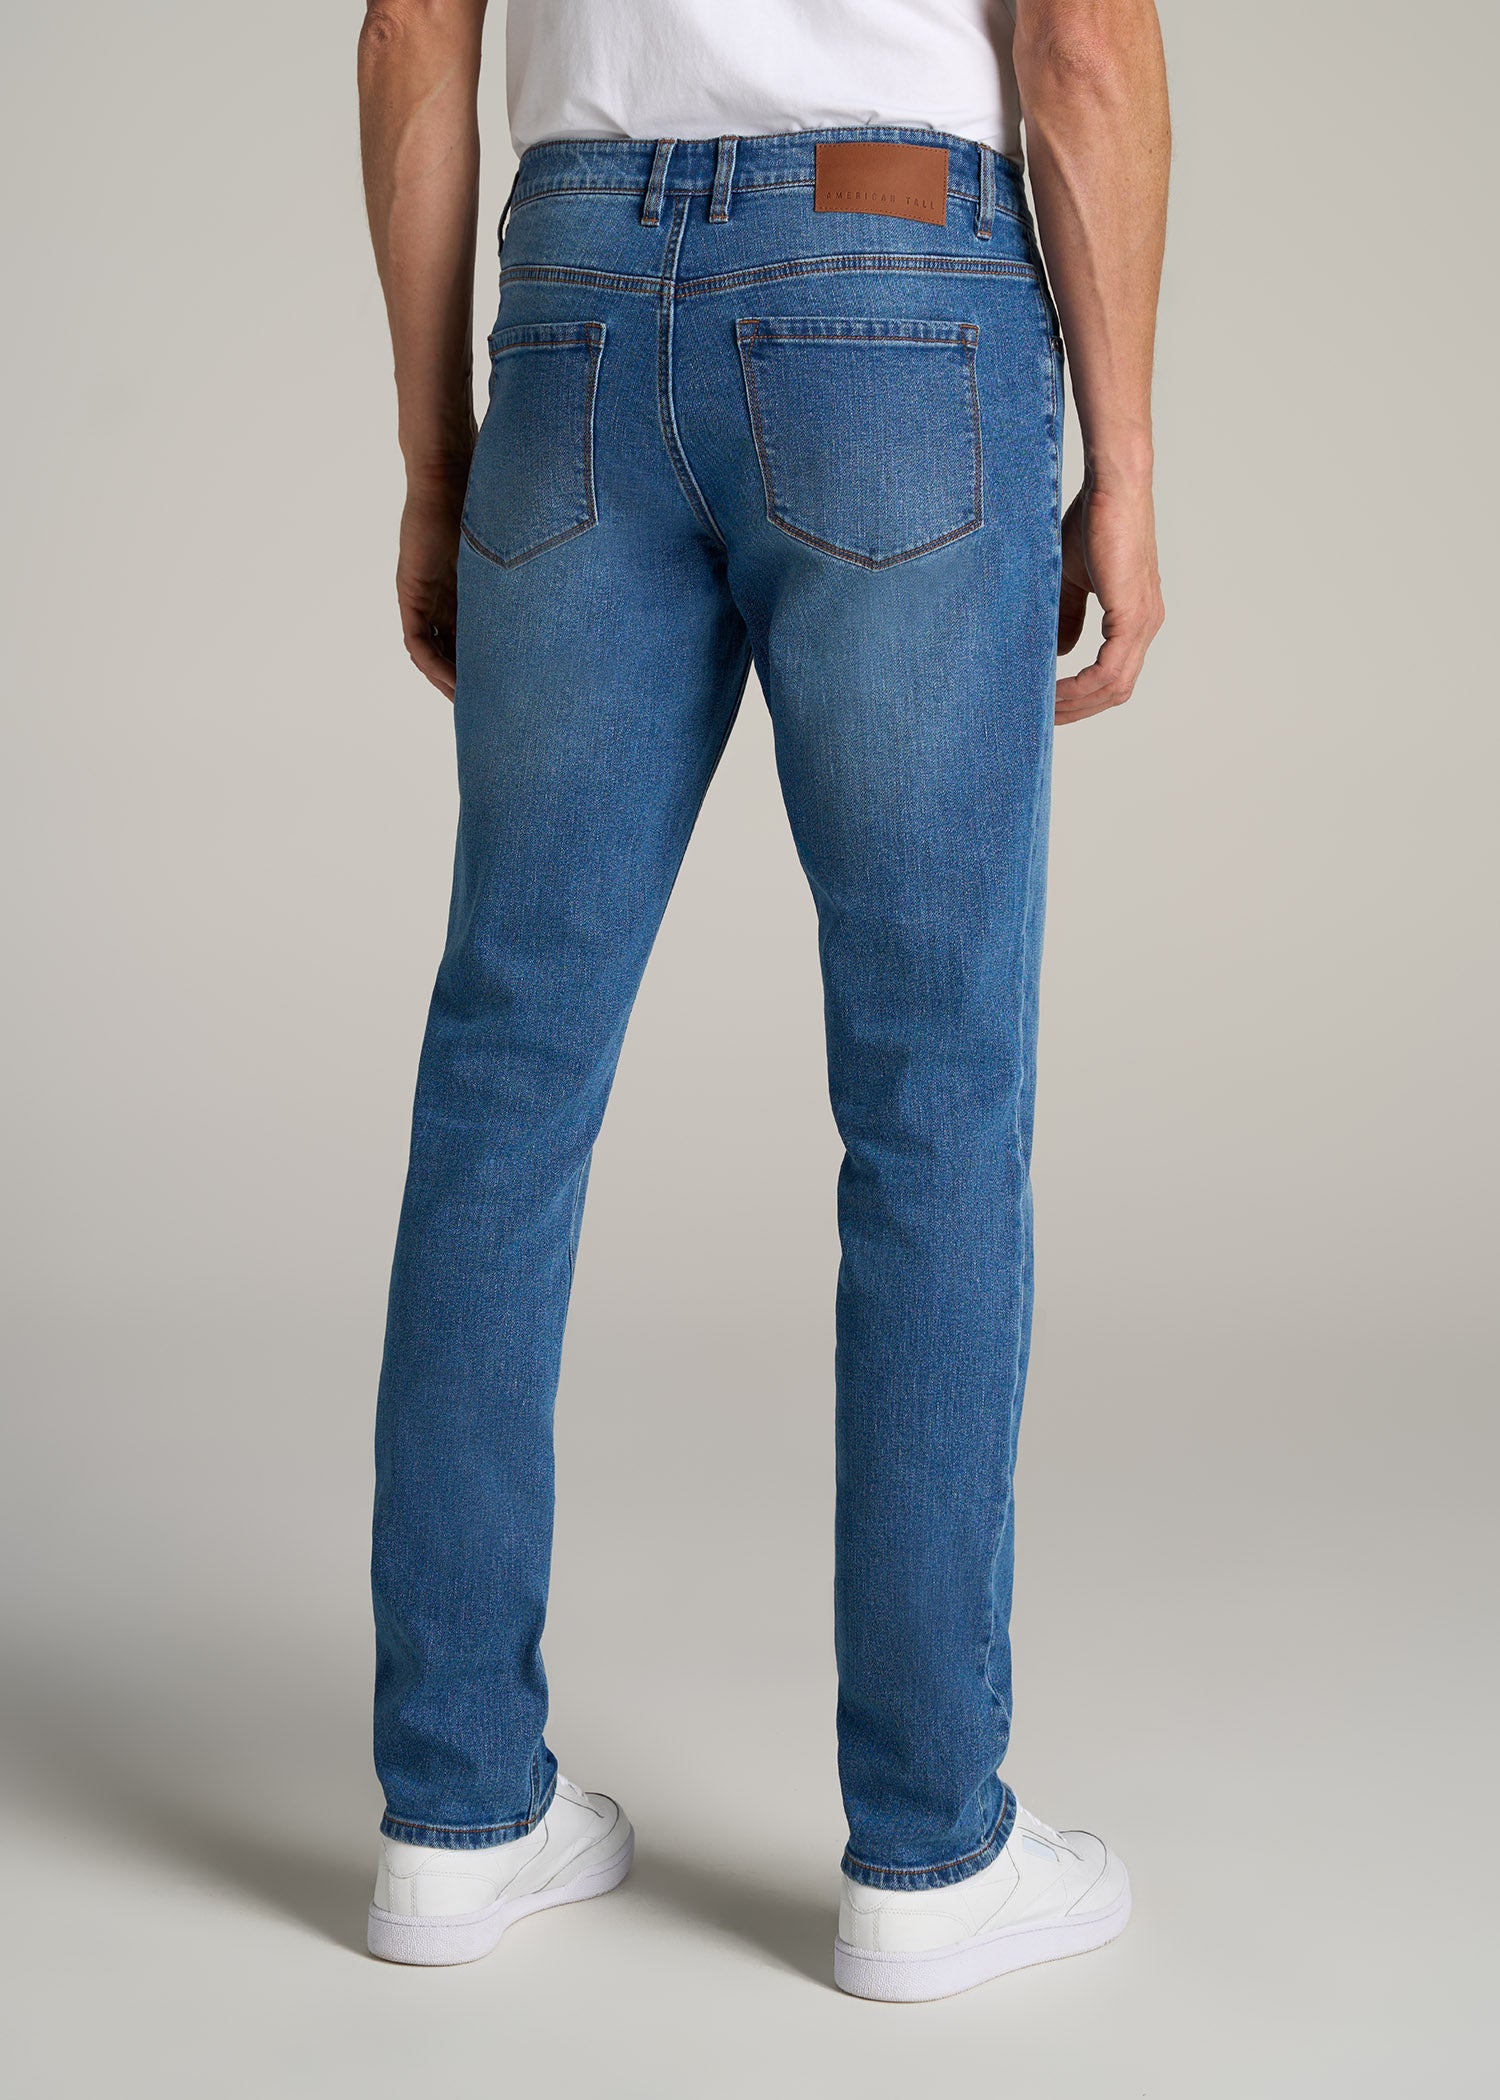 Buy Slim-Fit Blue Jeans for men on Sale price 1001 - Zellbury MAN